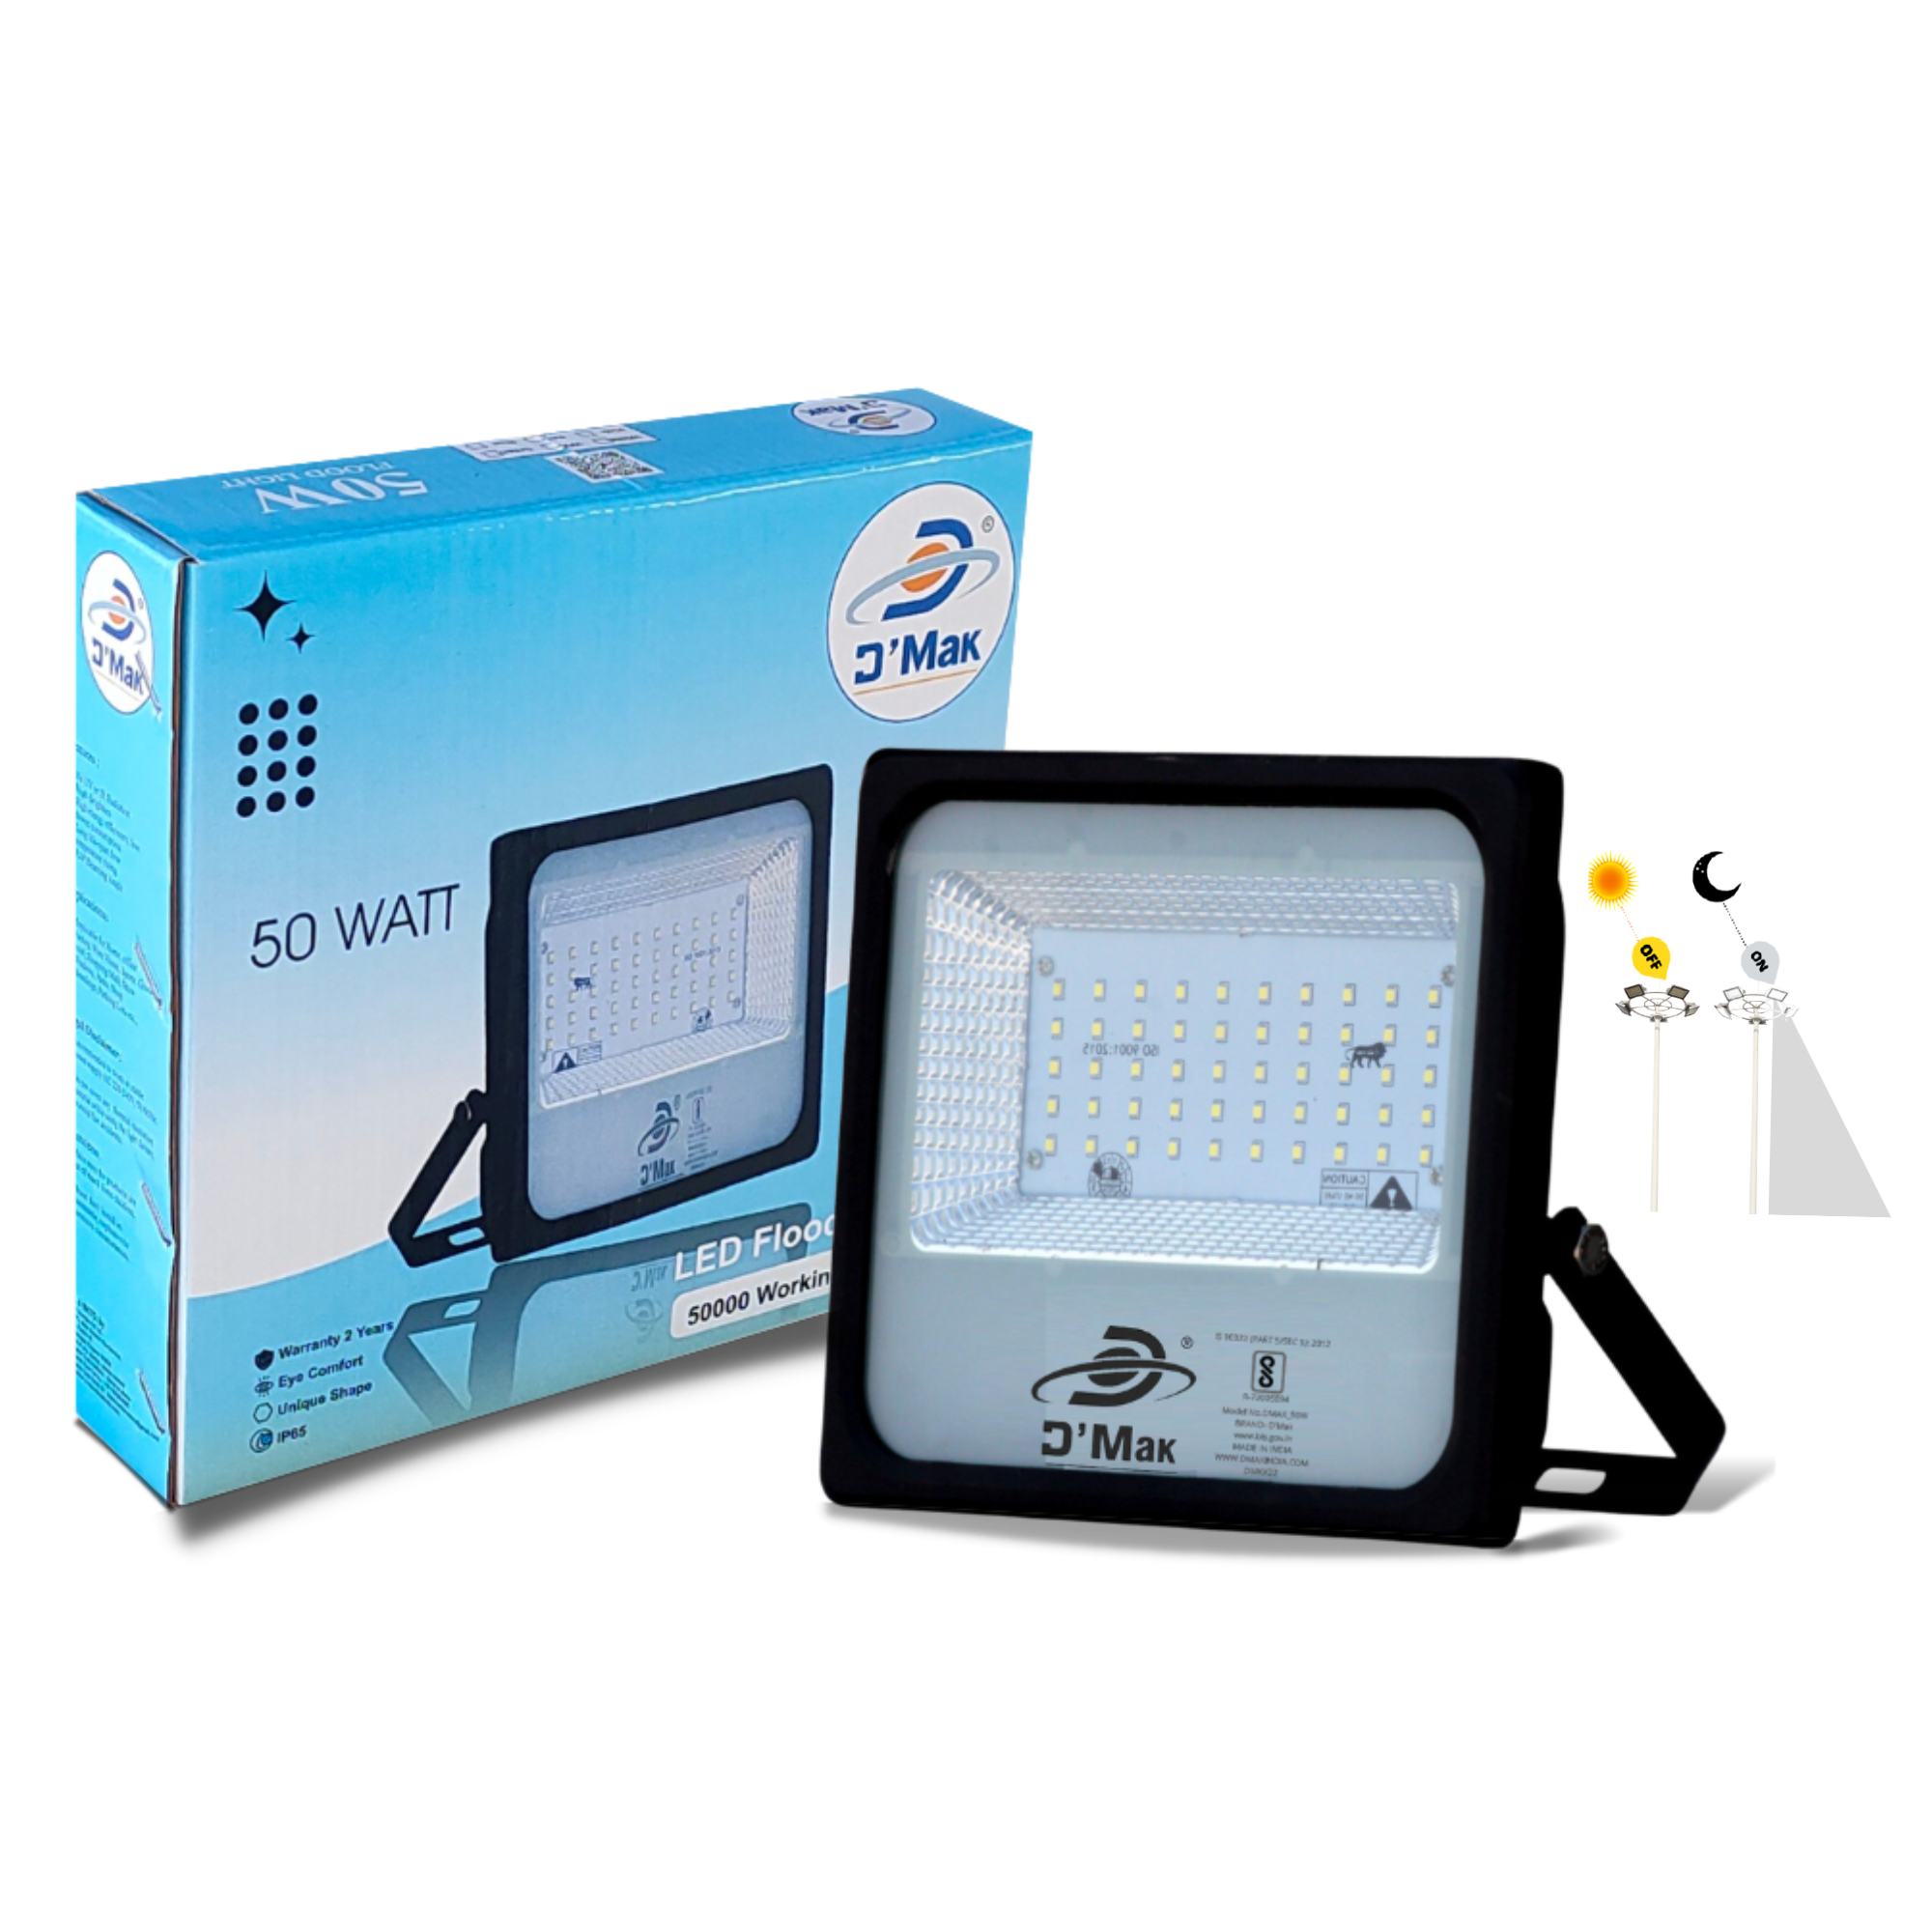 50 Watt Automatic Sensor System LED Down Chawk Flood Light Grey Body Waterproof IP65 For Outdoor Purposes